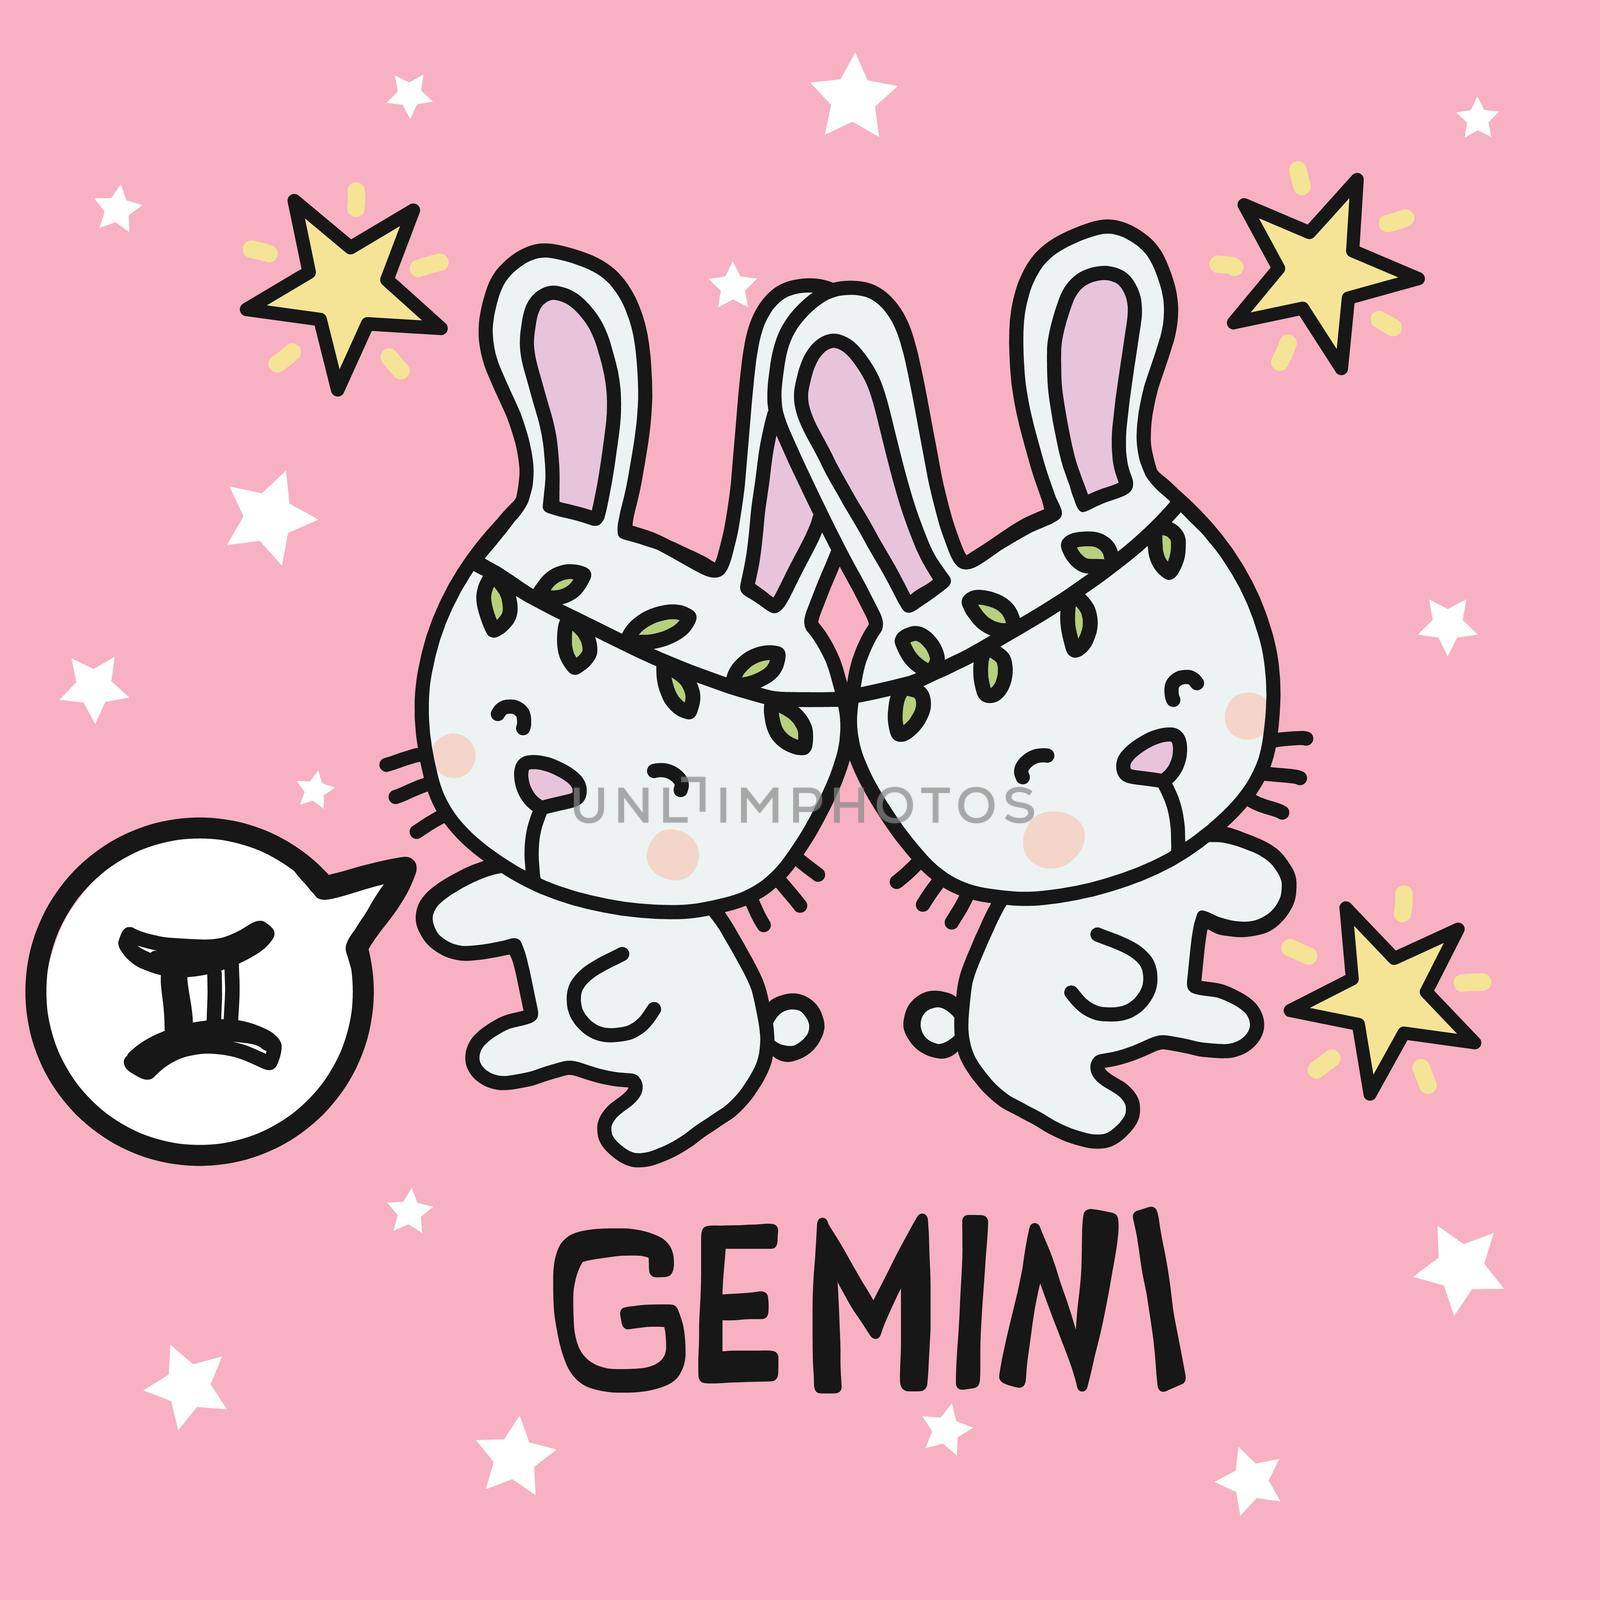 Gemini horoscope logo vector illustration by Yoopho